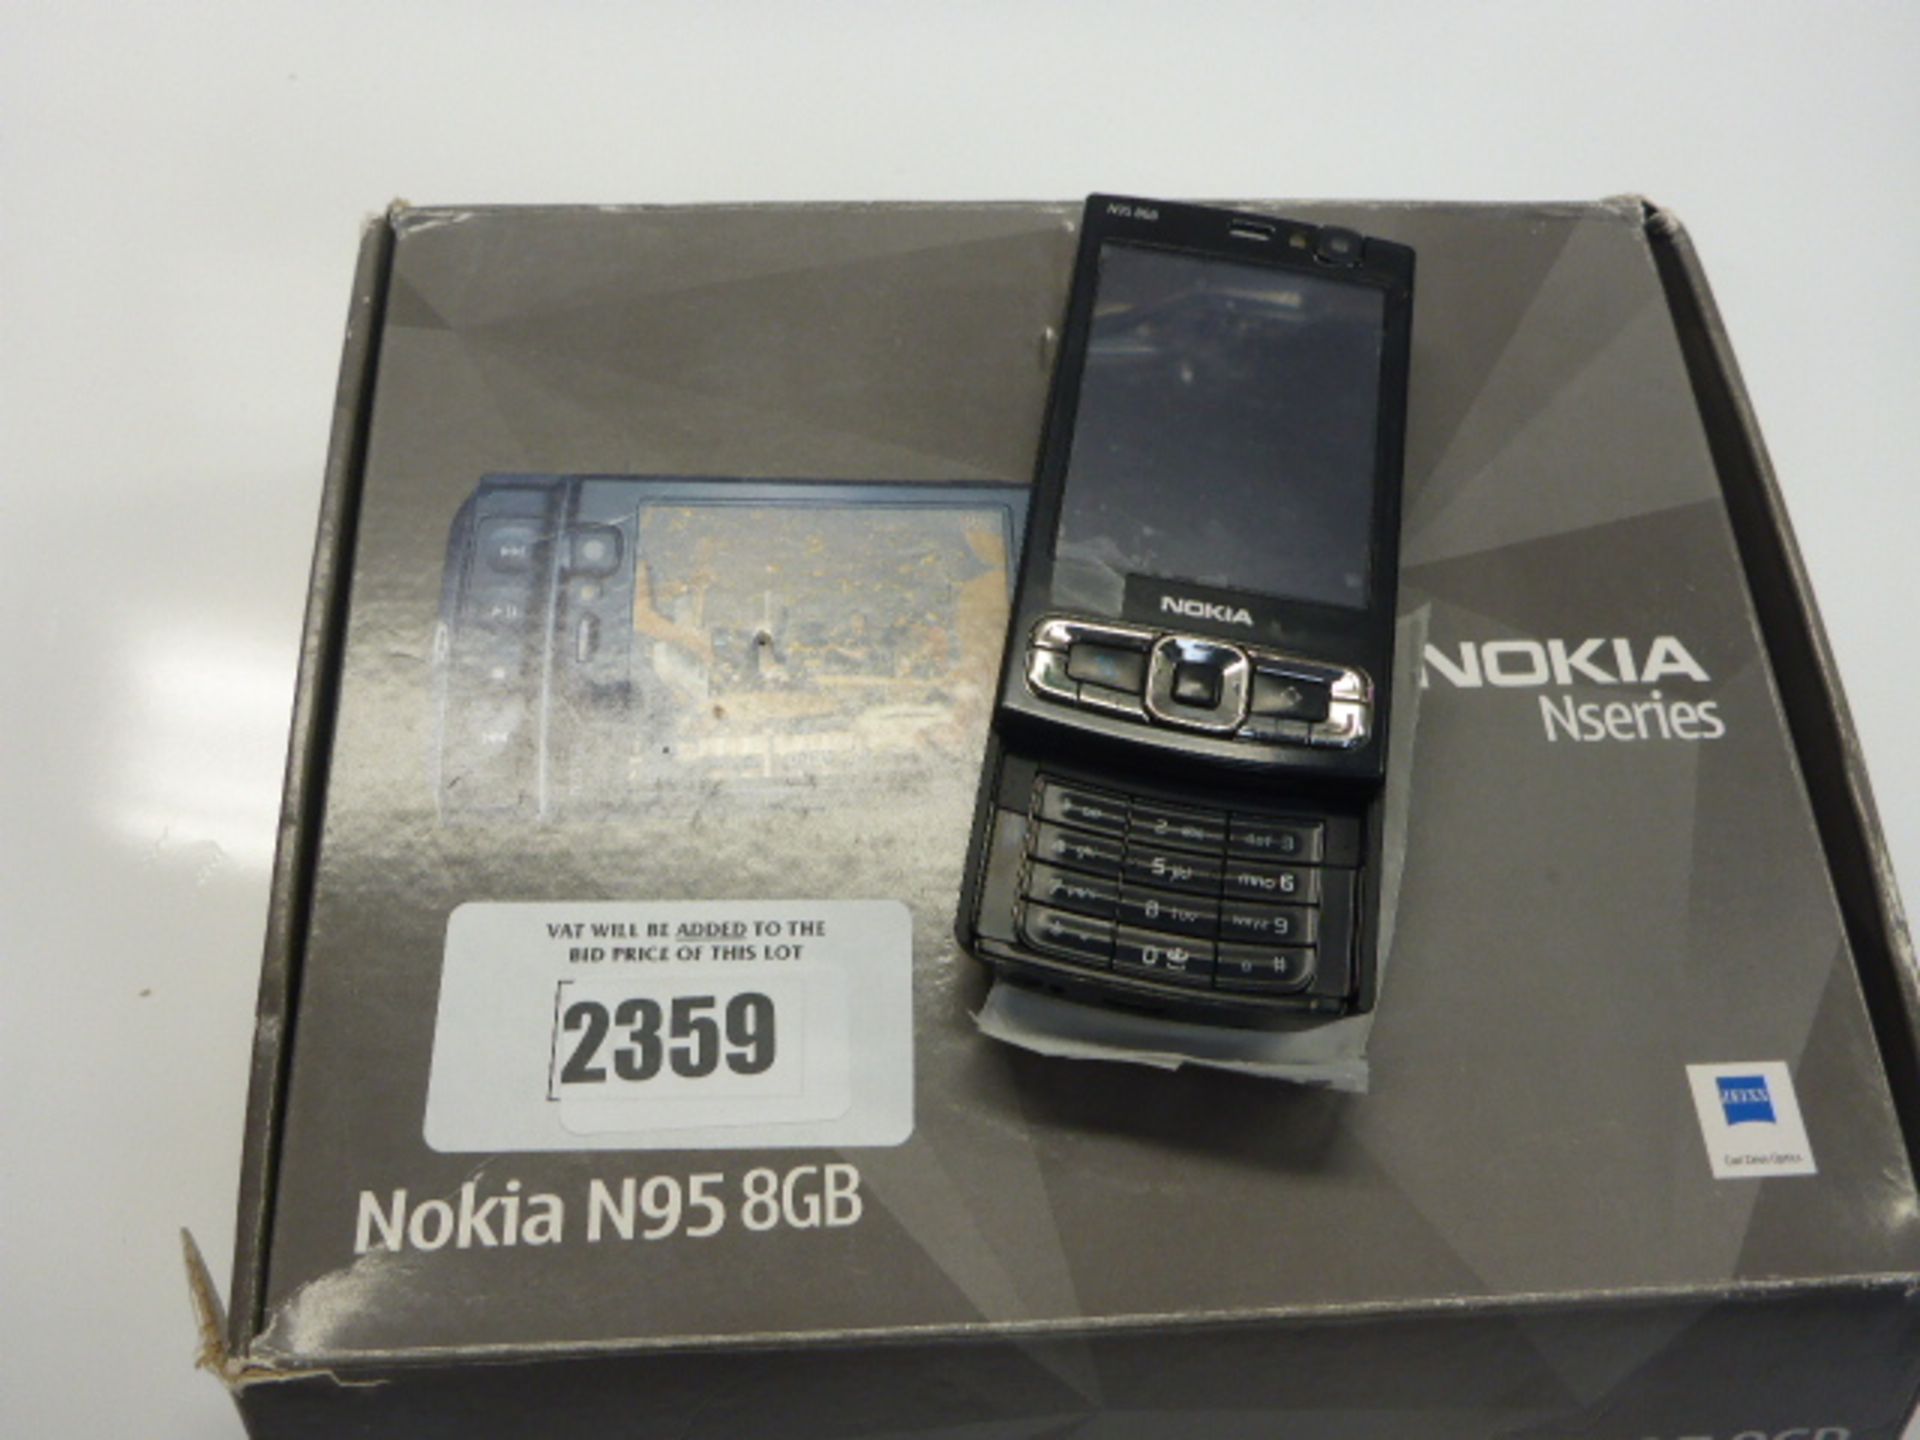 Nokia N95 8GB mobile boxed.